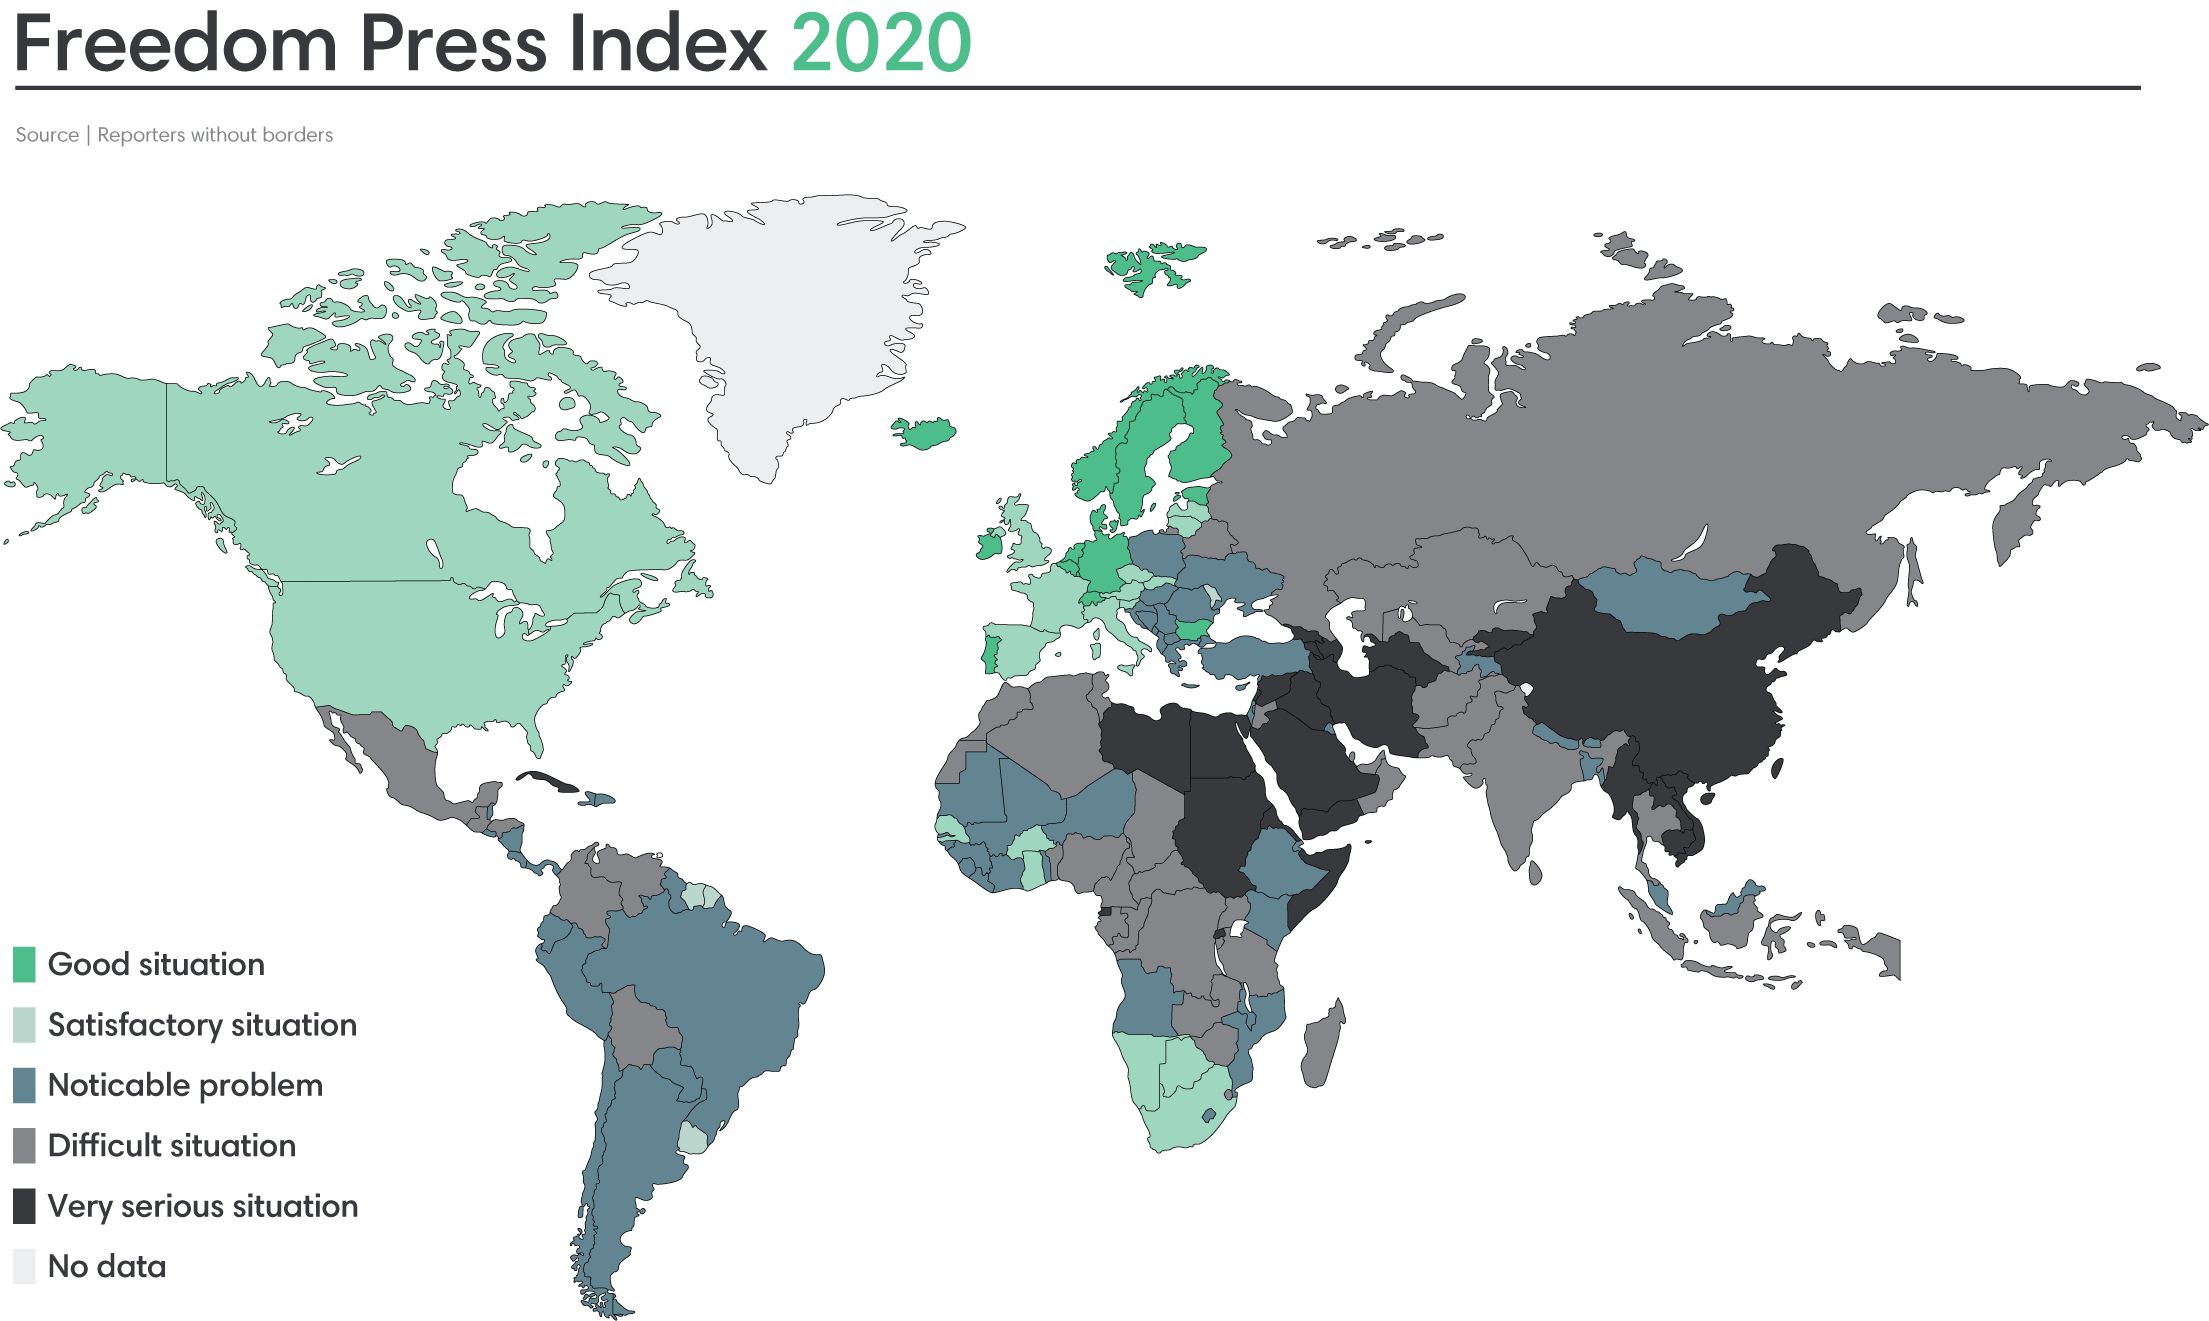 Freedom press index 2020